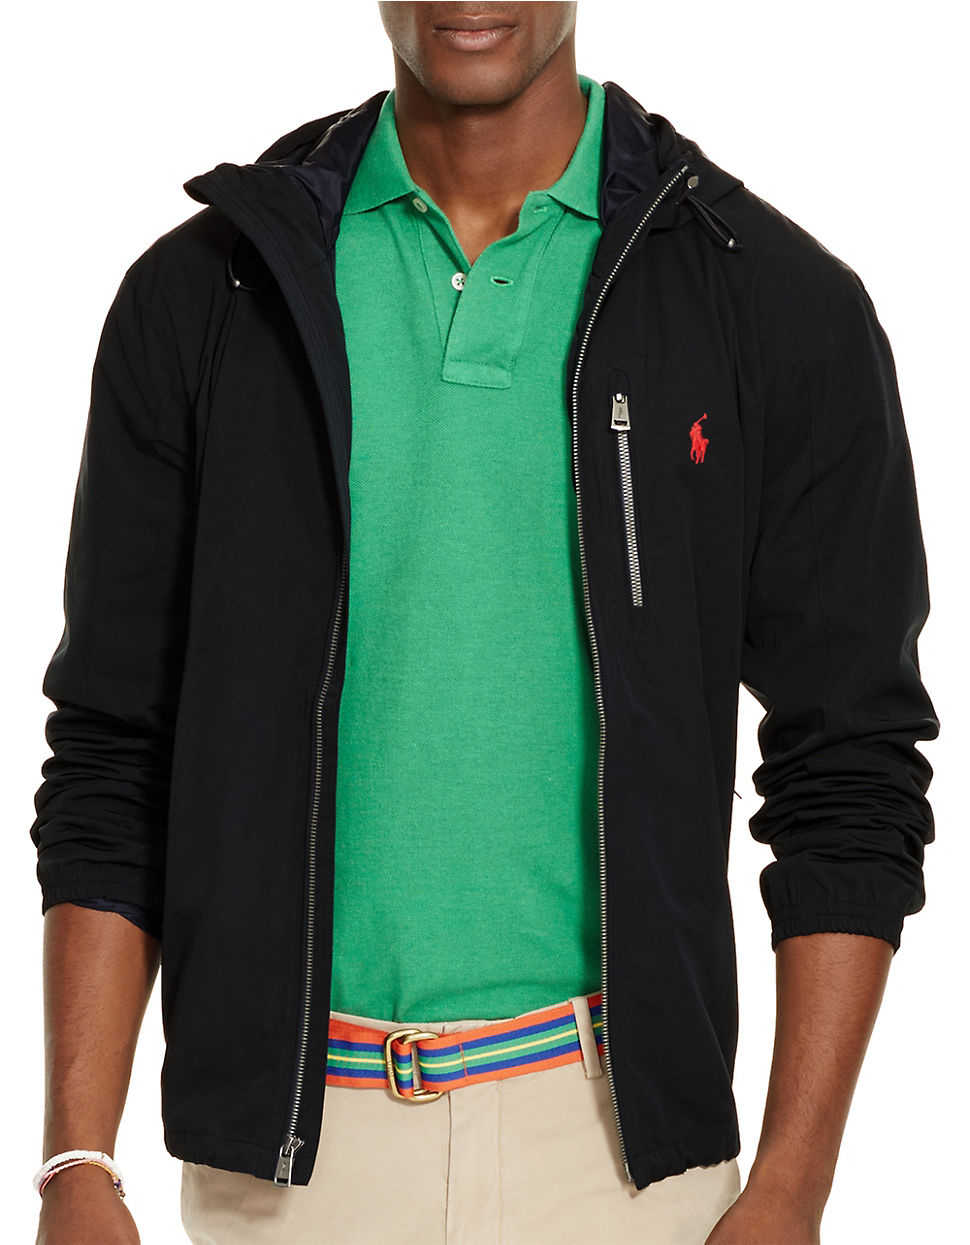 Polo Ralph Lauren Hooded Anorak Jacket in Black for Men - Lyst